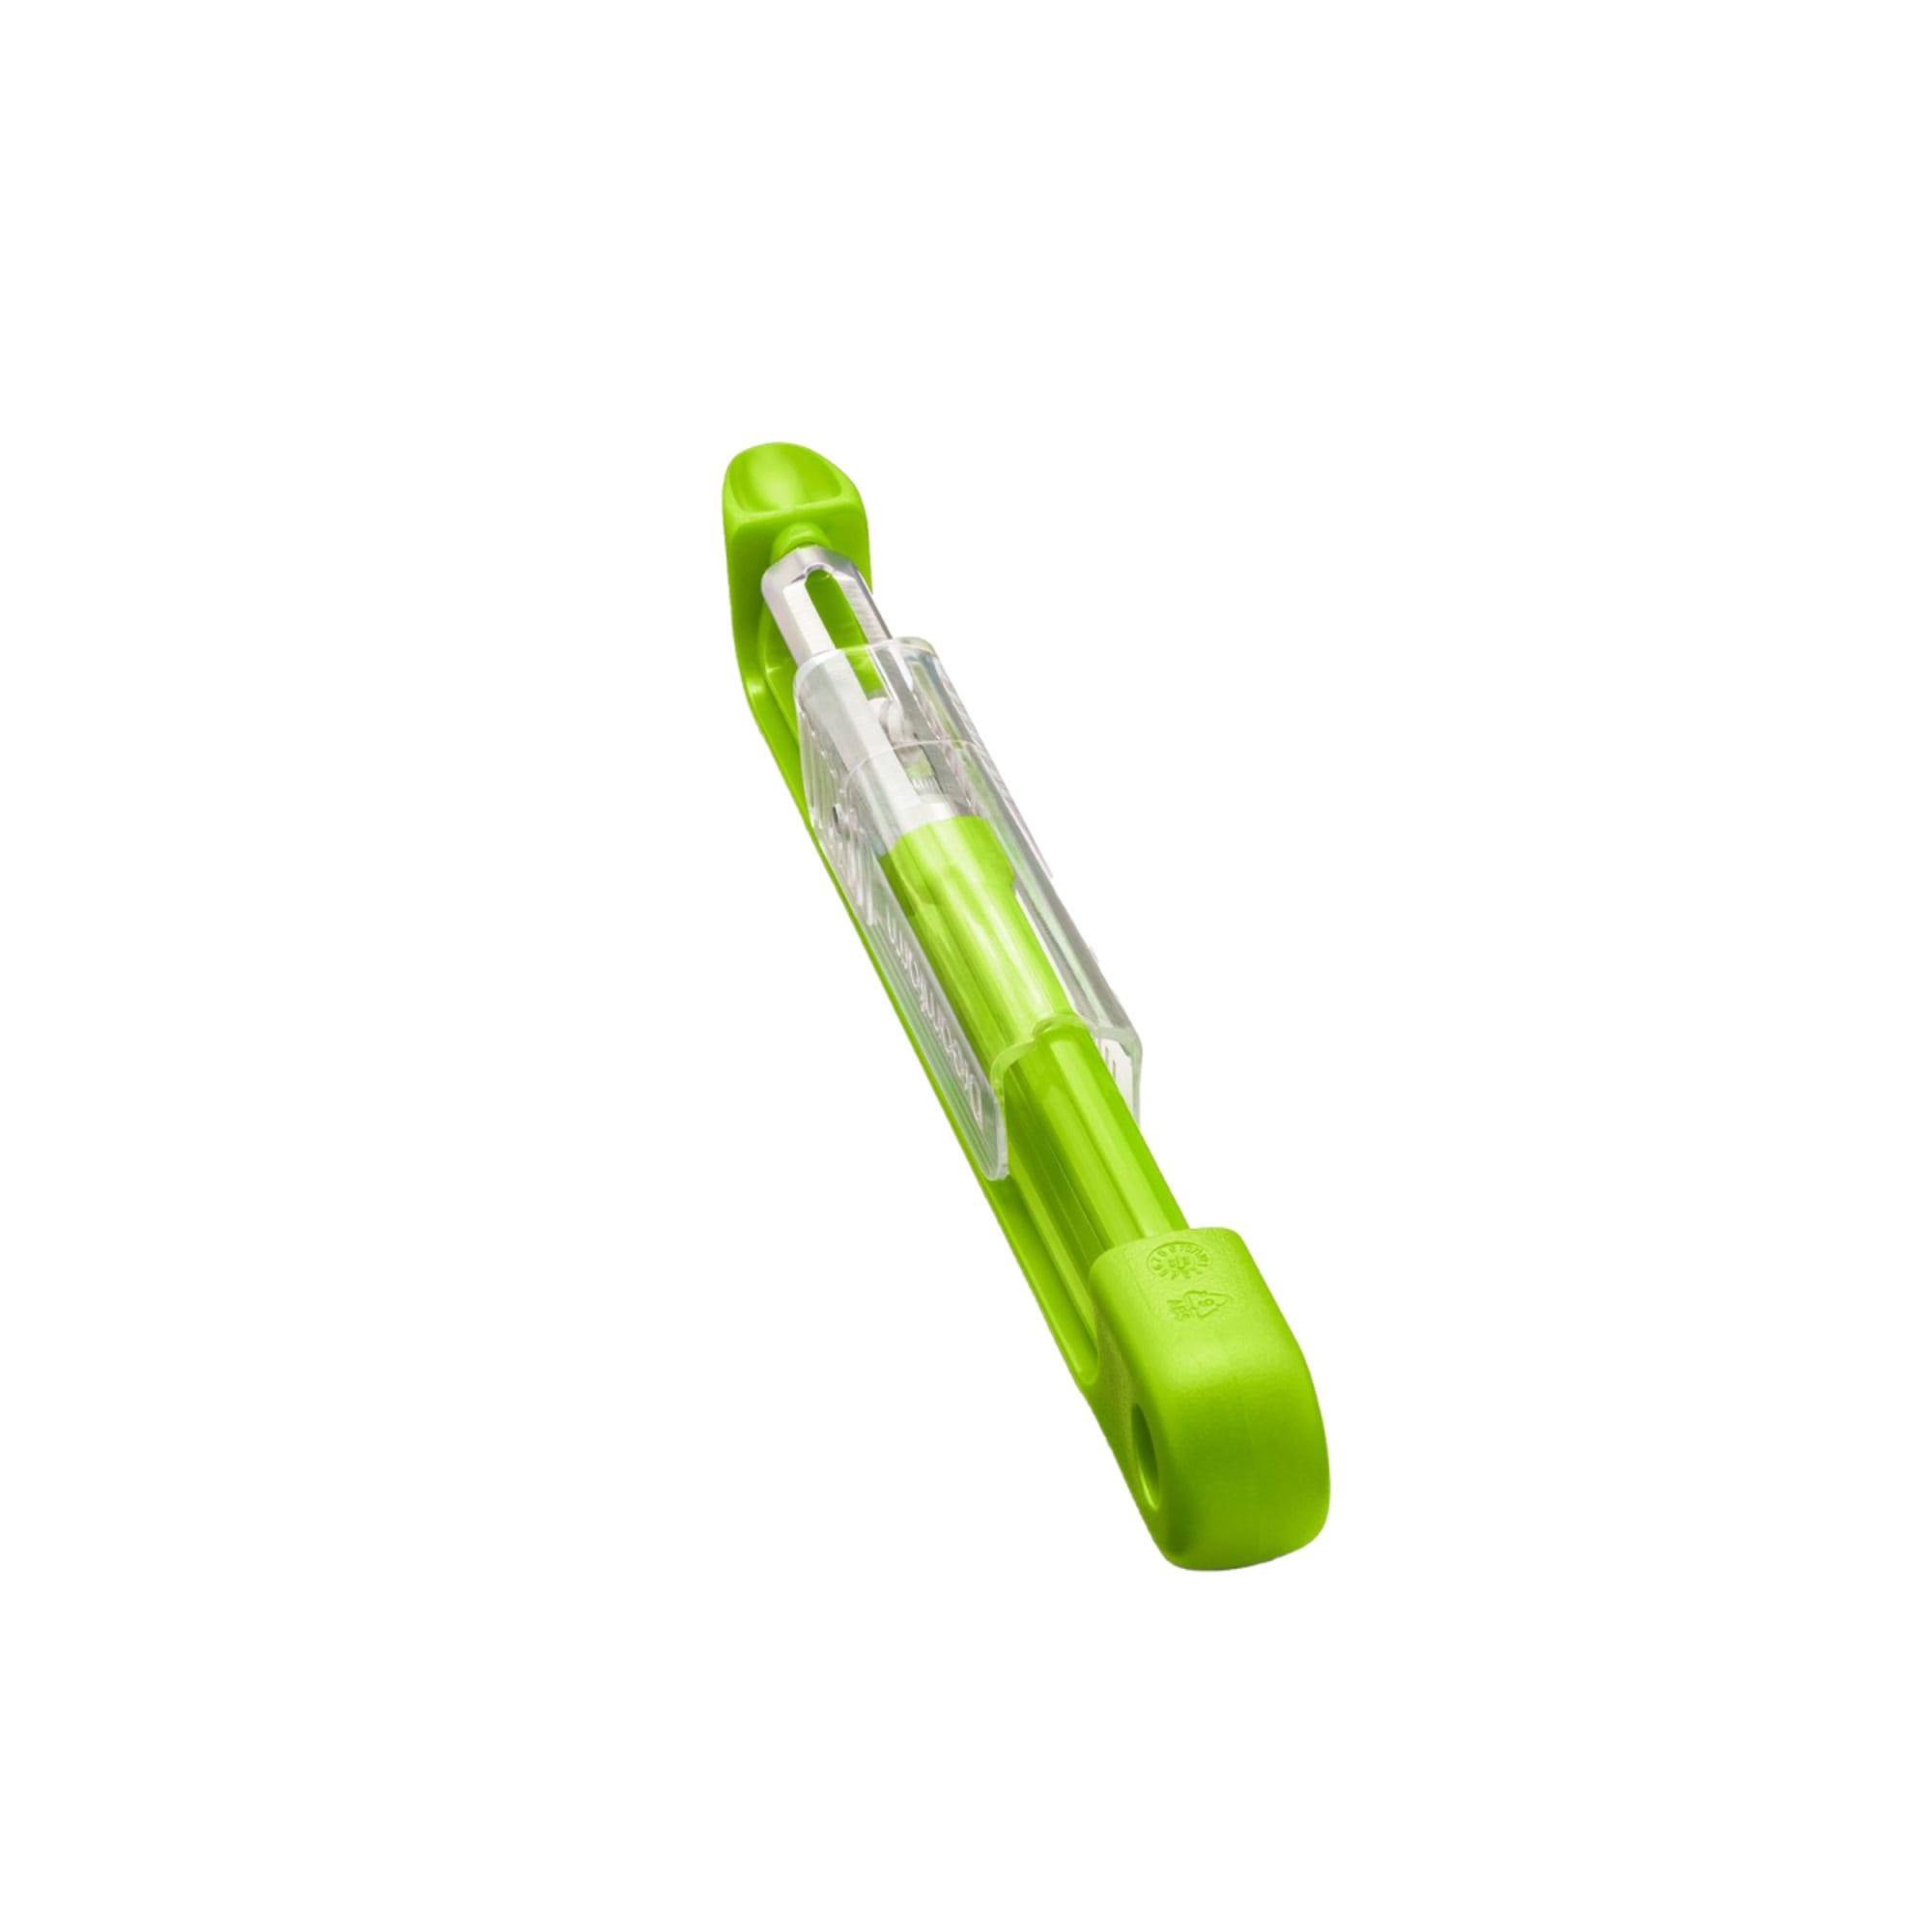 Dreamfarm Sharple Sharp Safety Peeler Green Image 7